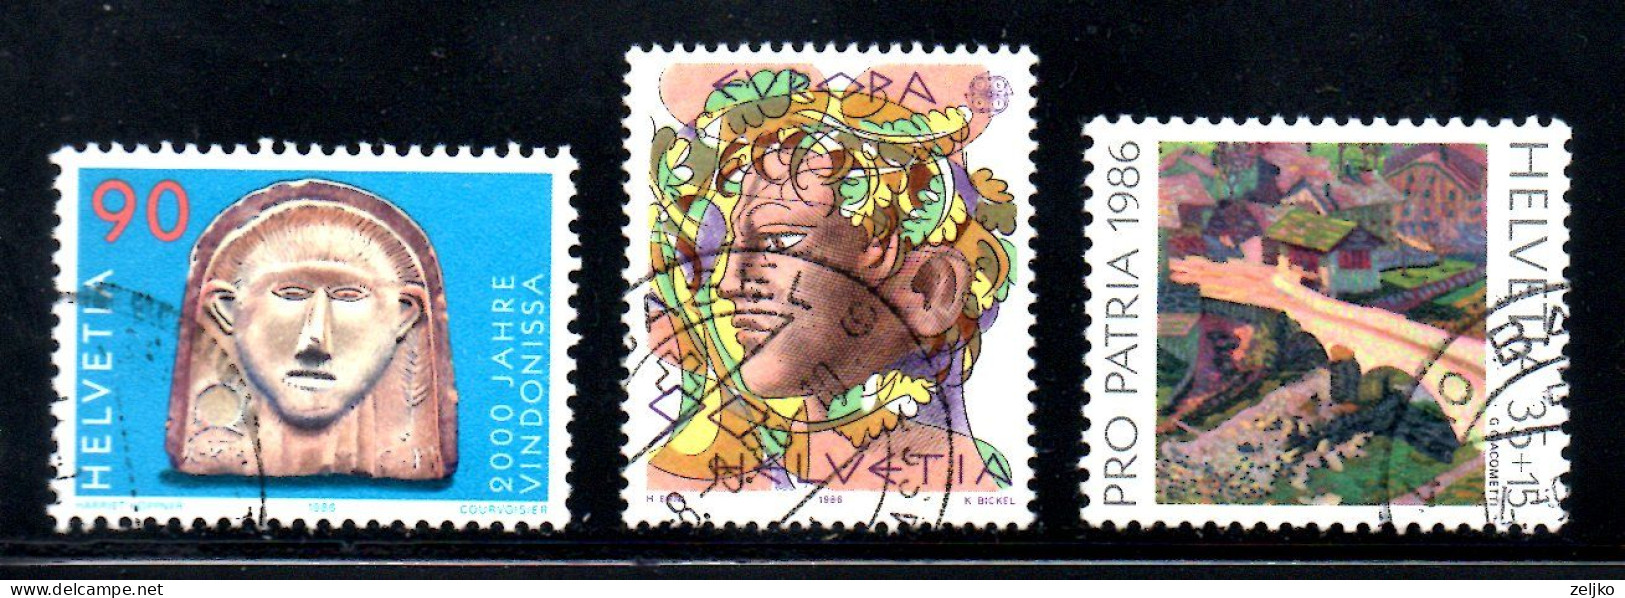 Switzerland, Used, 1986, Michel 1311, 1316, 1317, Lot - Storia Postale